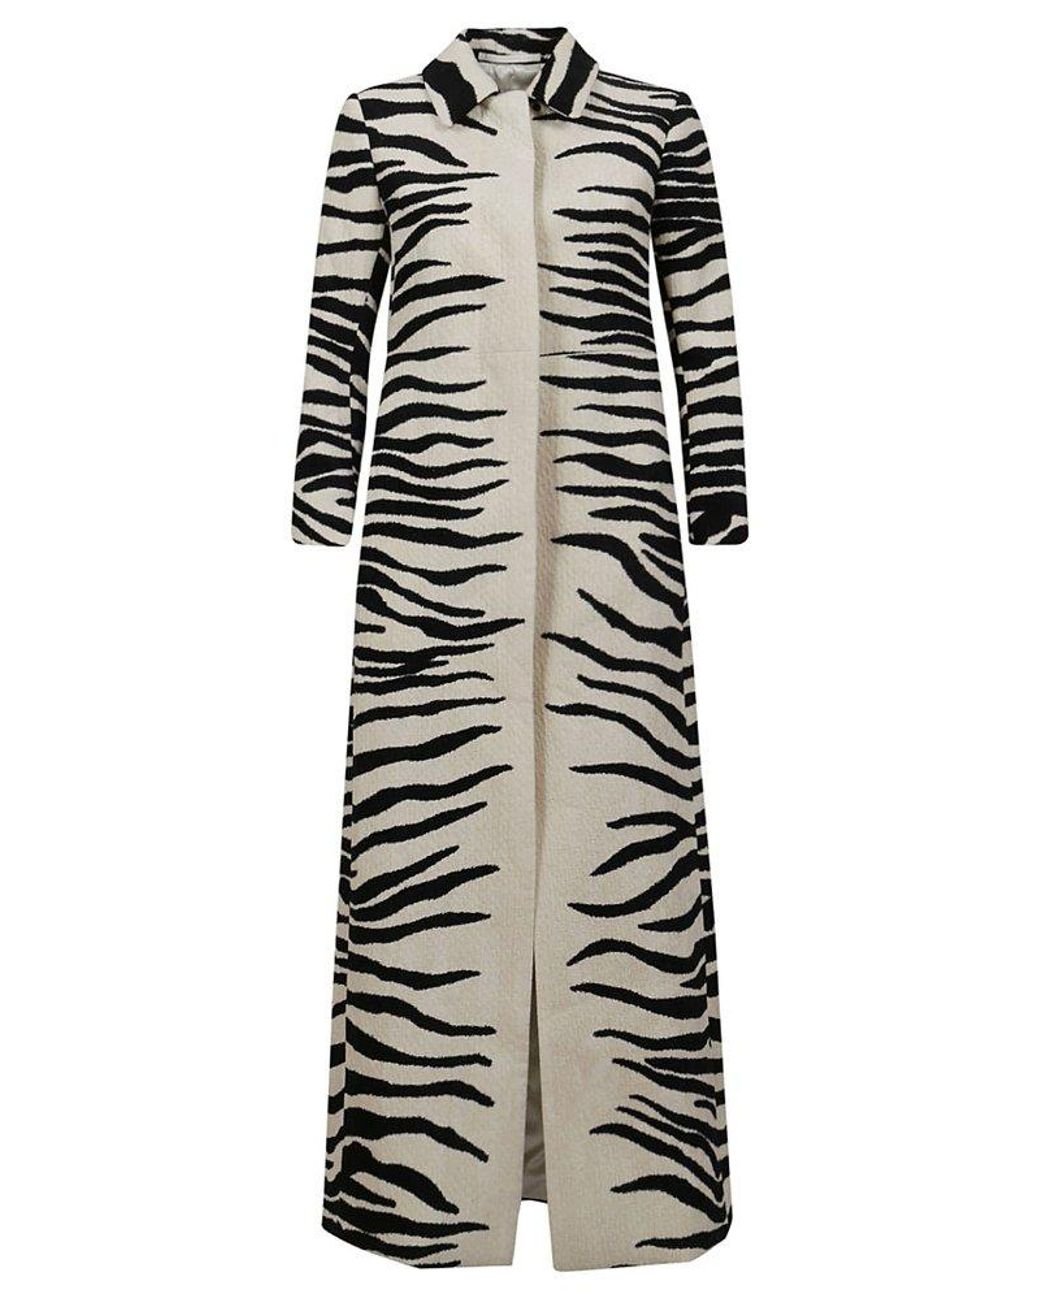 Dries Van Noten Zebra Printed Long Coat in Natural | Lyst